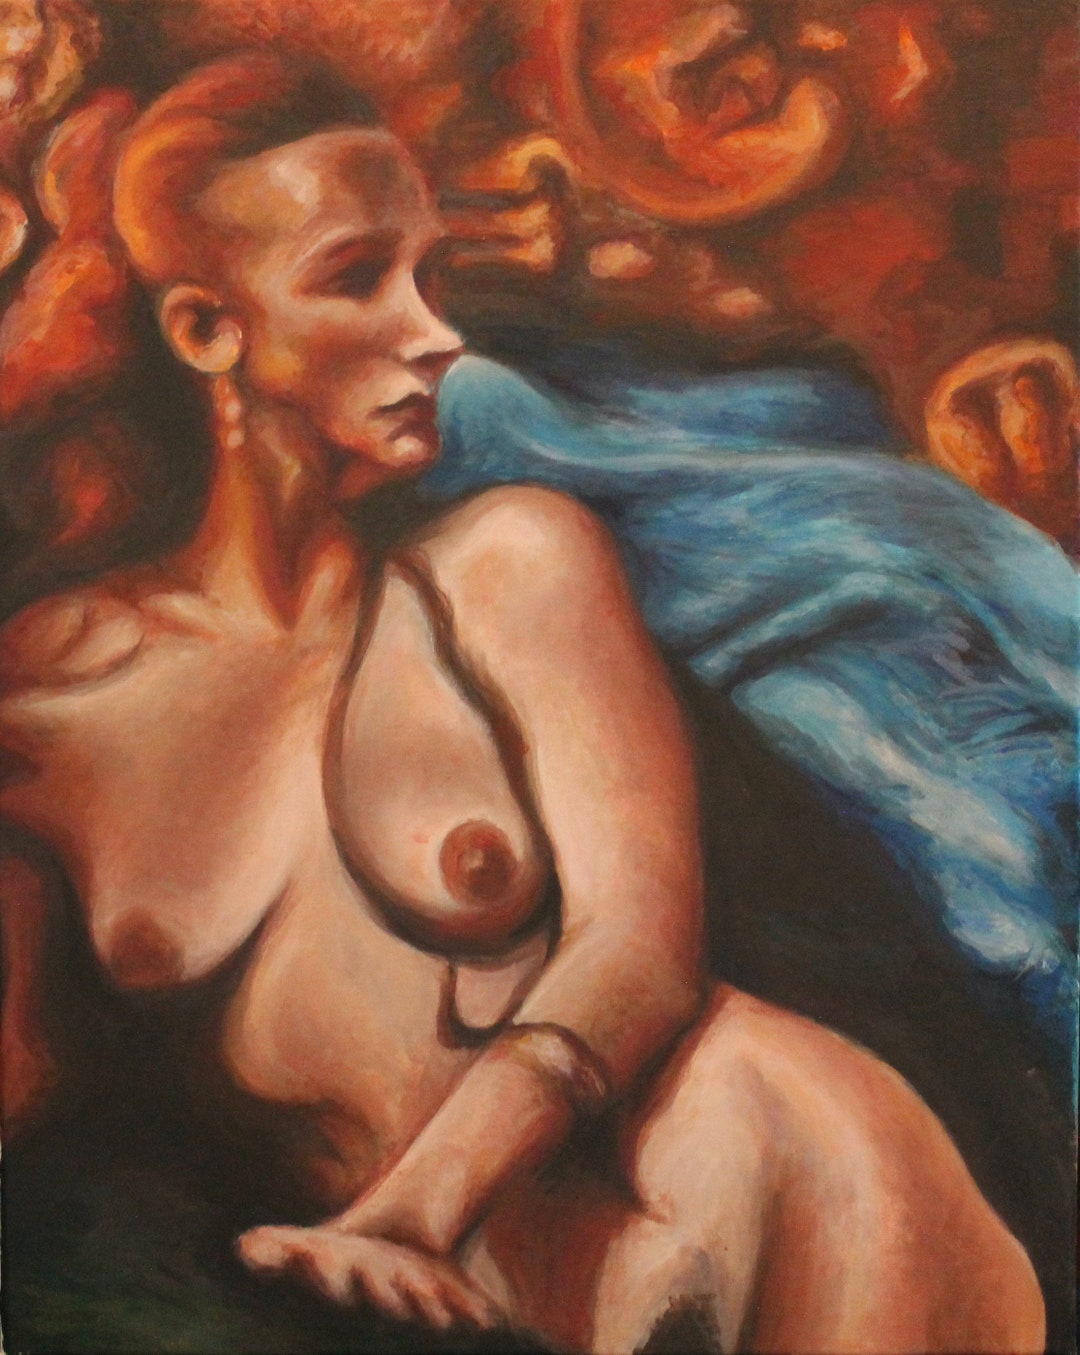 Helen Mirren Caligula Nude Painting - Etsy New Zealand